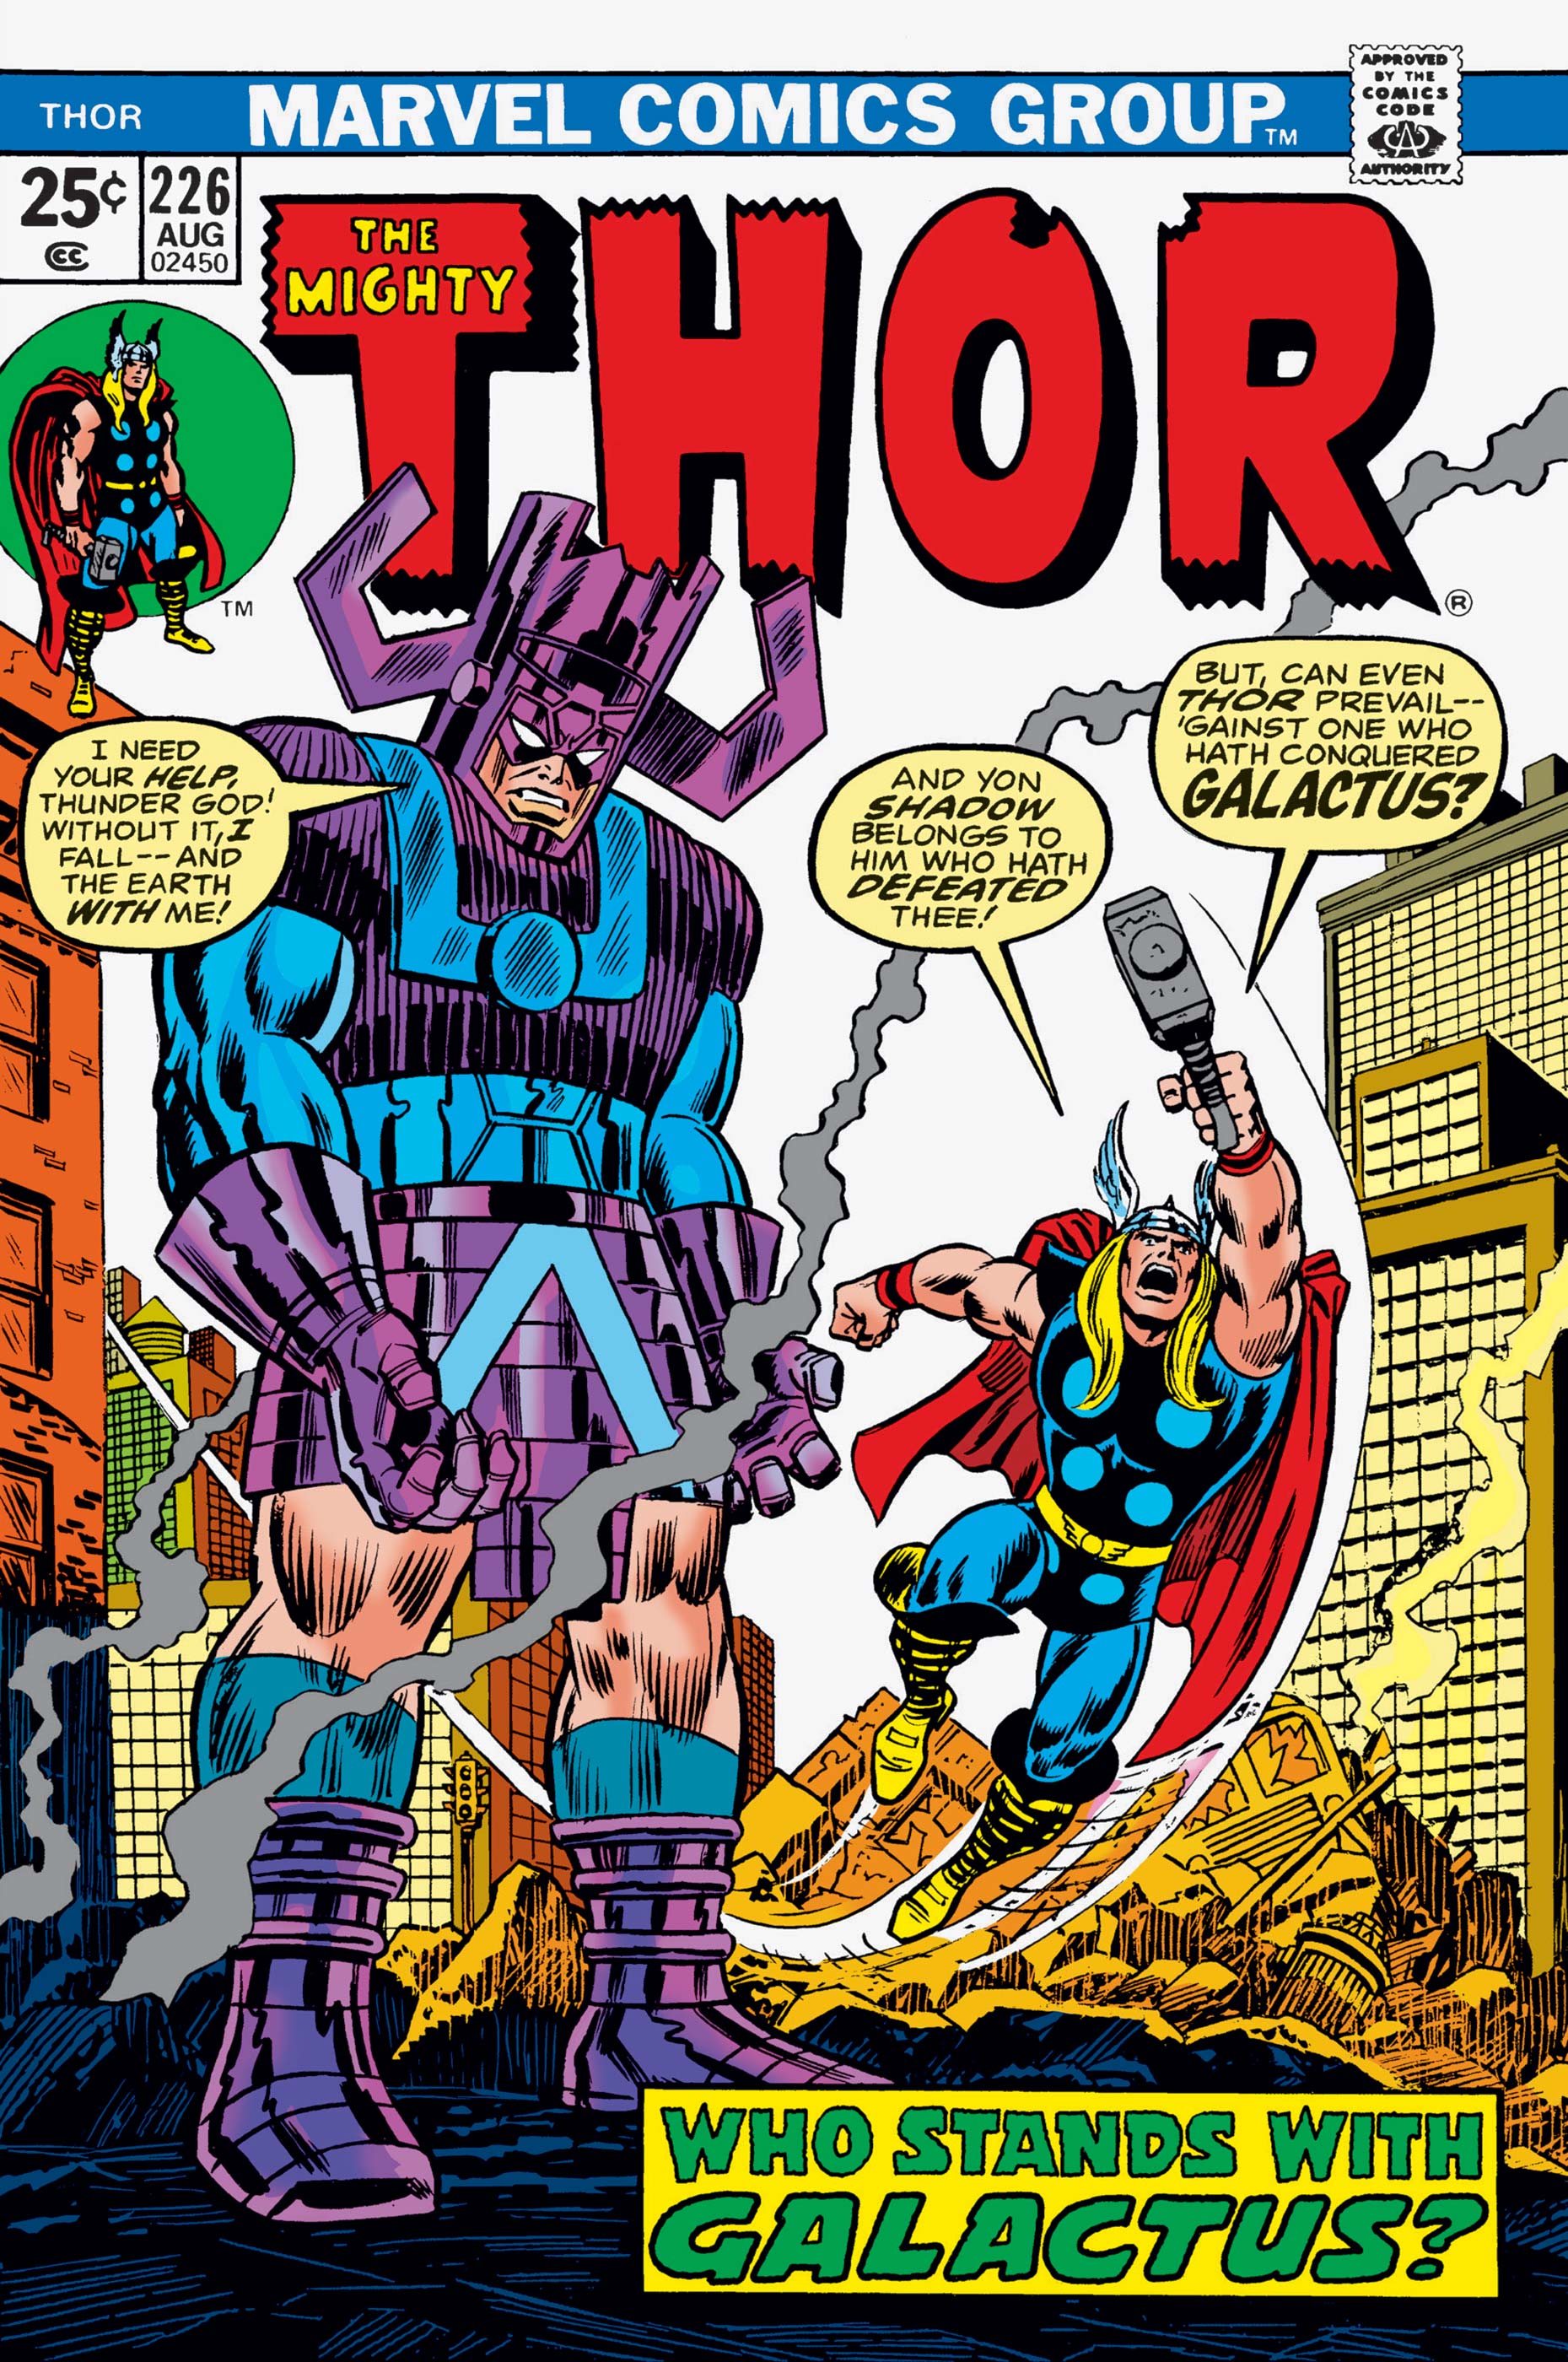 Thor (1966) #226